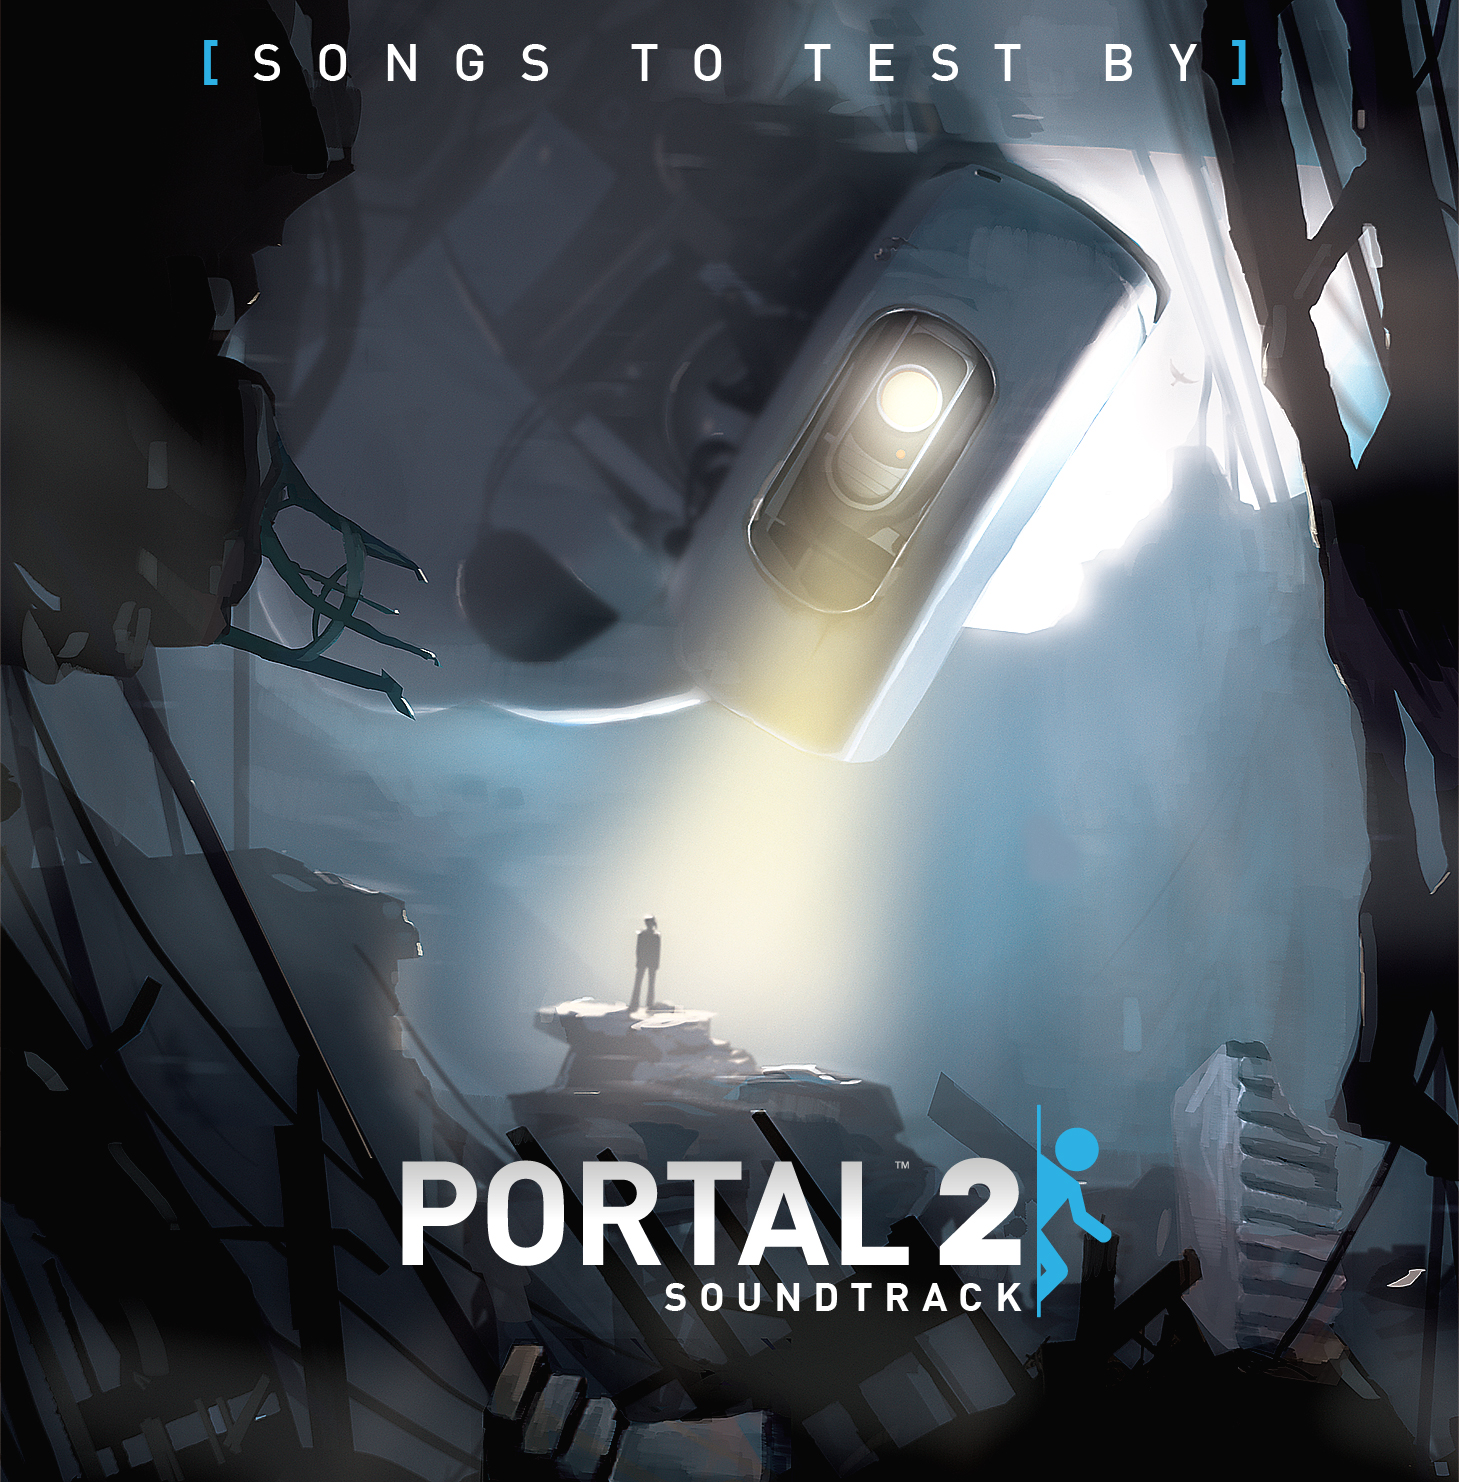 Portal 2 classical music